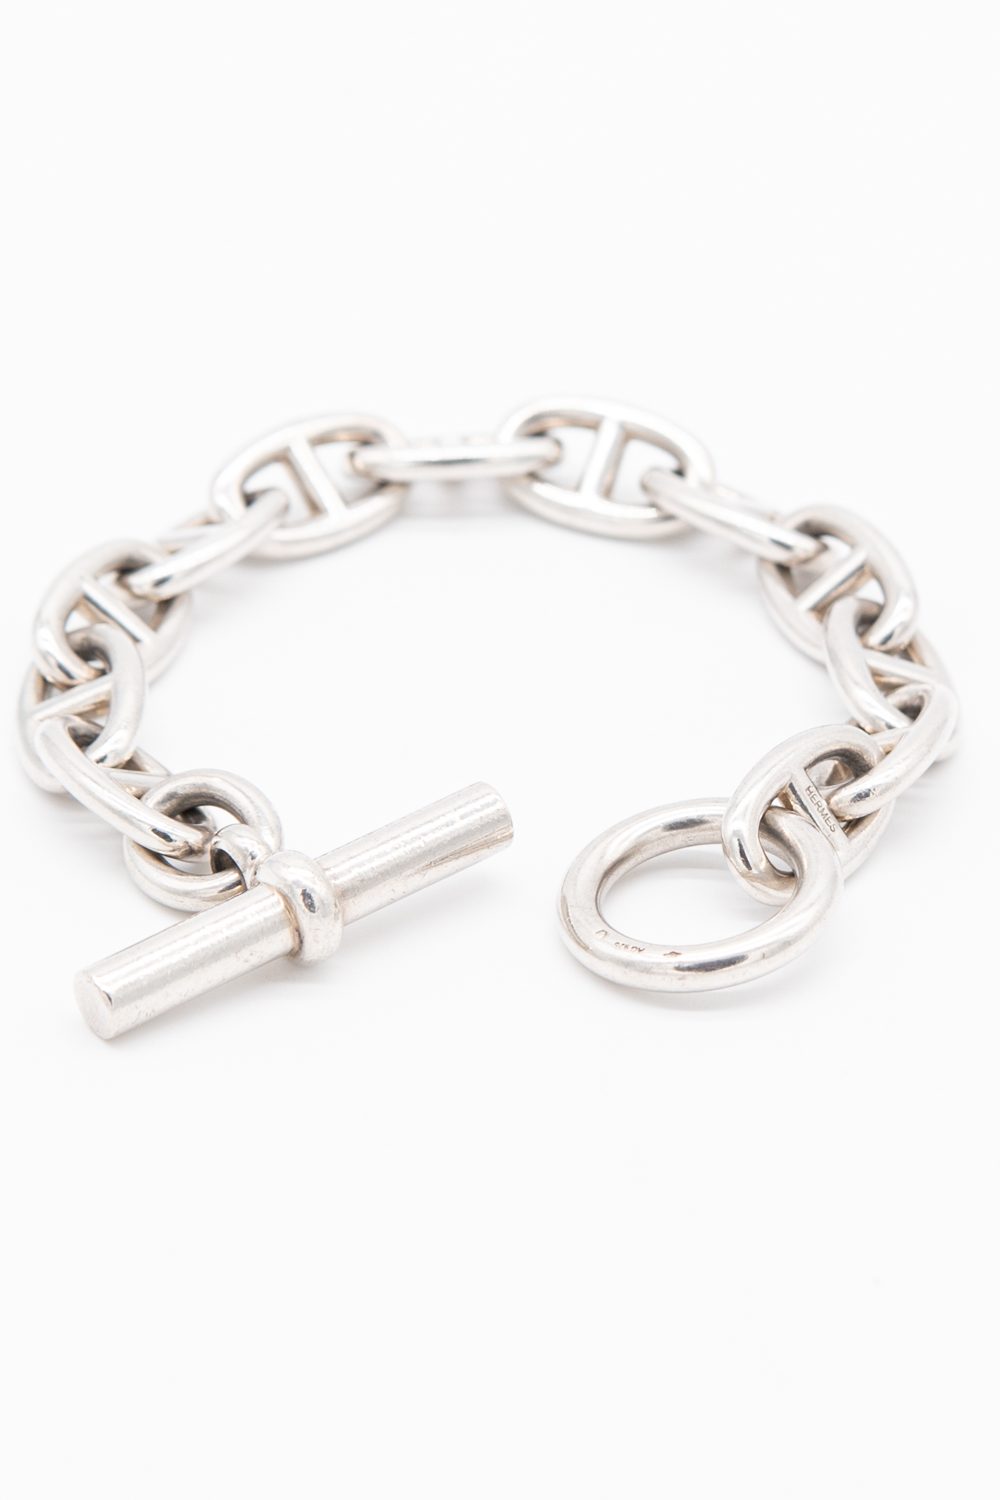 Hermès "Chaîne d'ancre" Armband in Silber